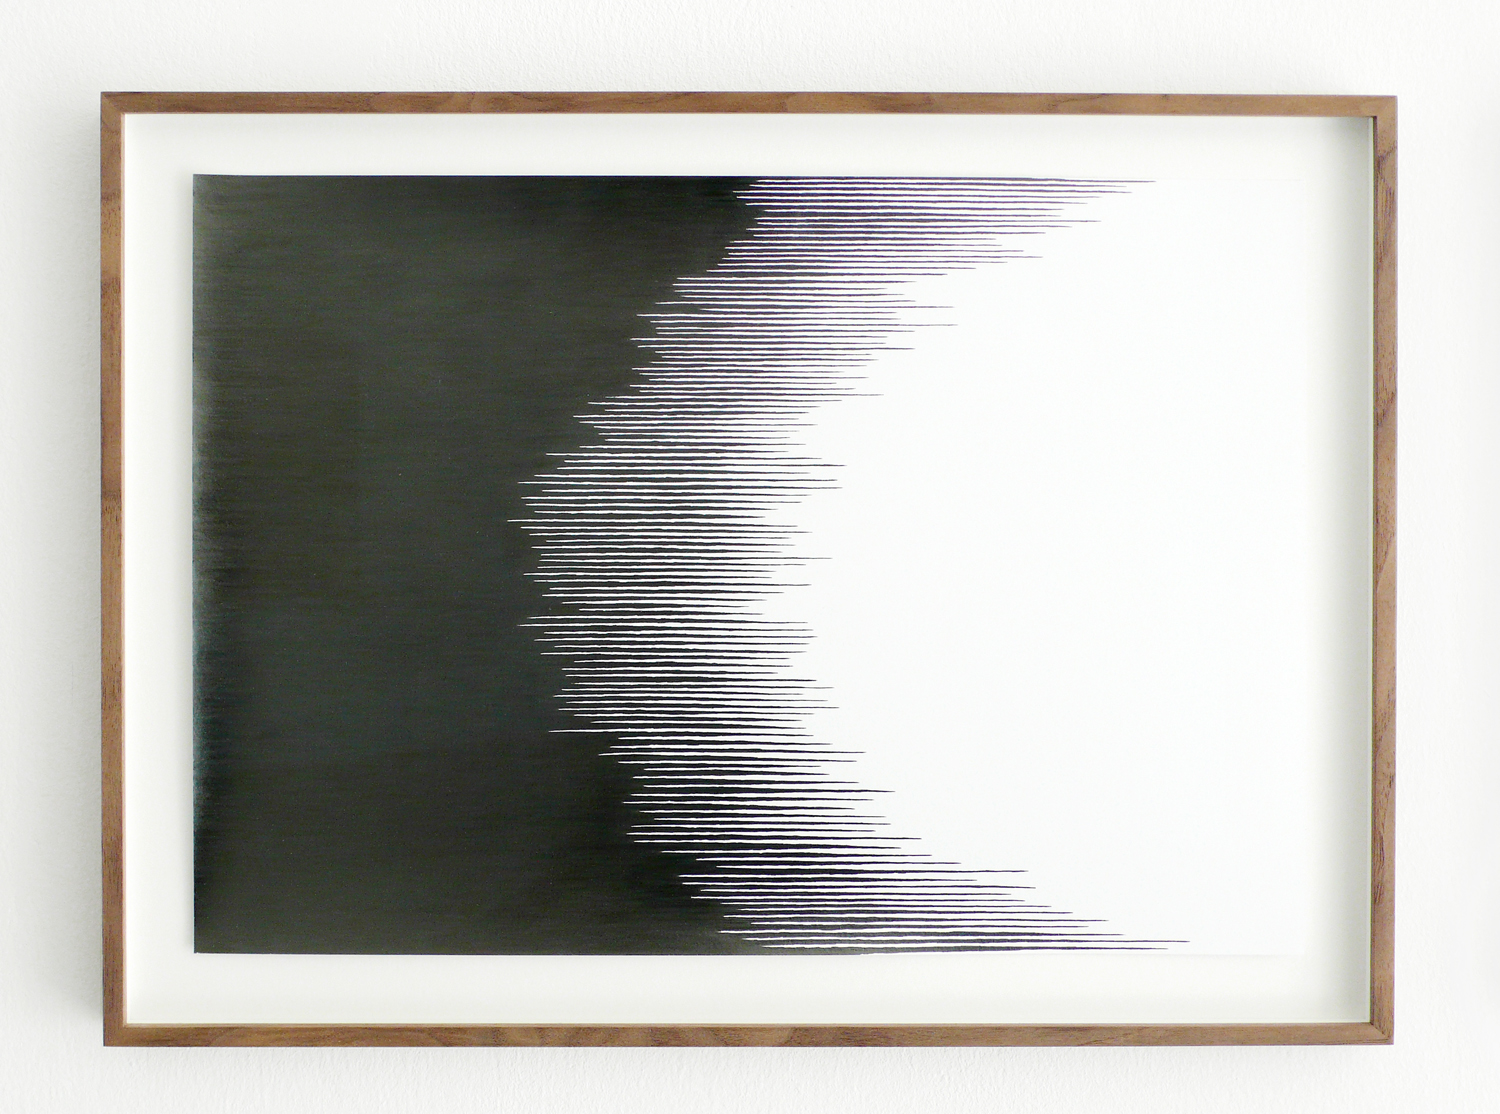   Vision/ ativan, 2008, pencil on paper, 29,7 x 42cm  